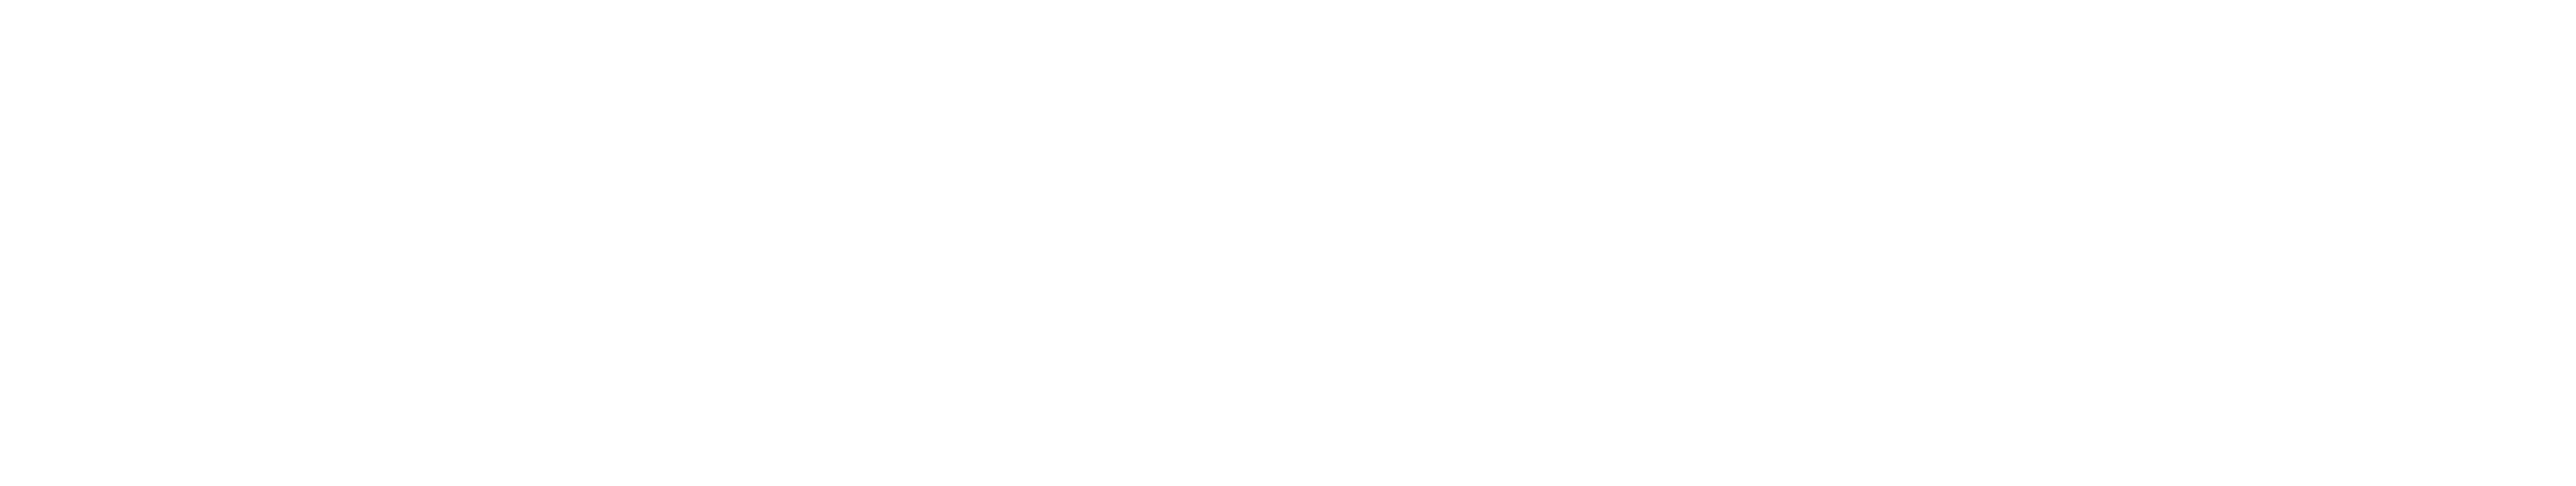 hooters-logo-white